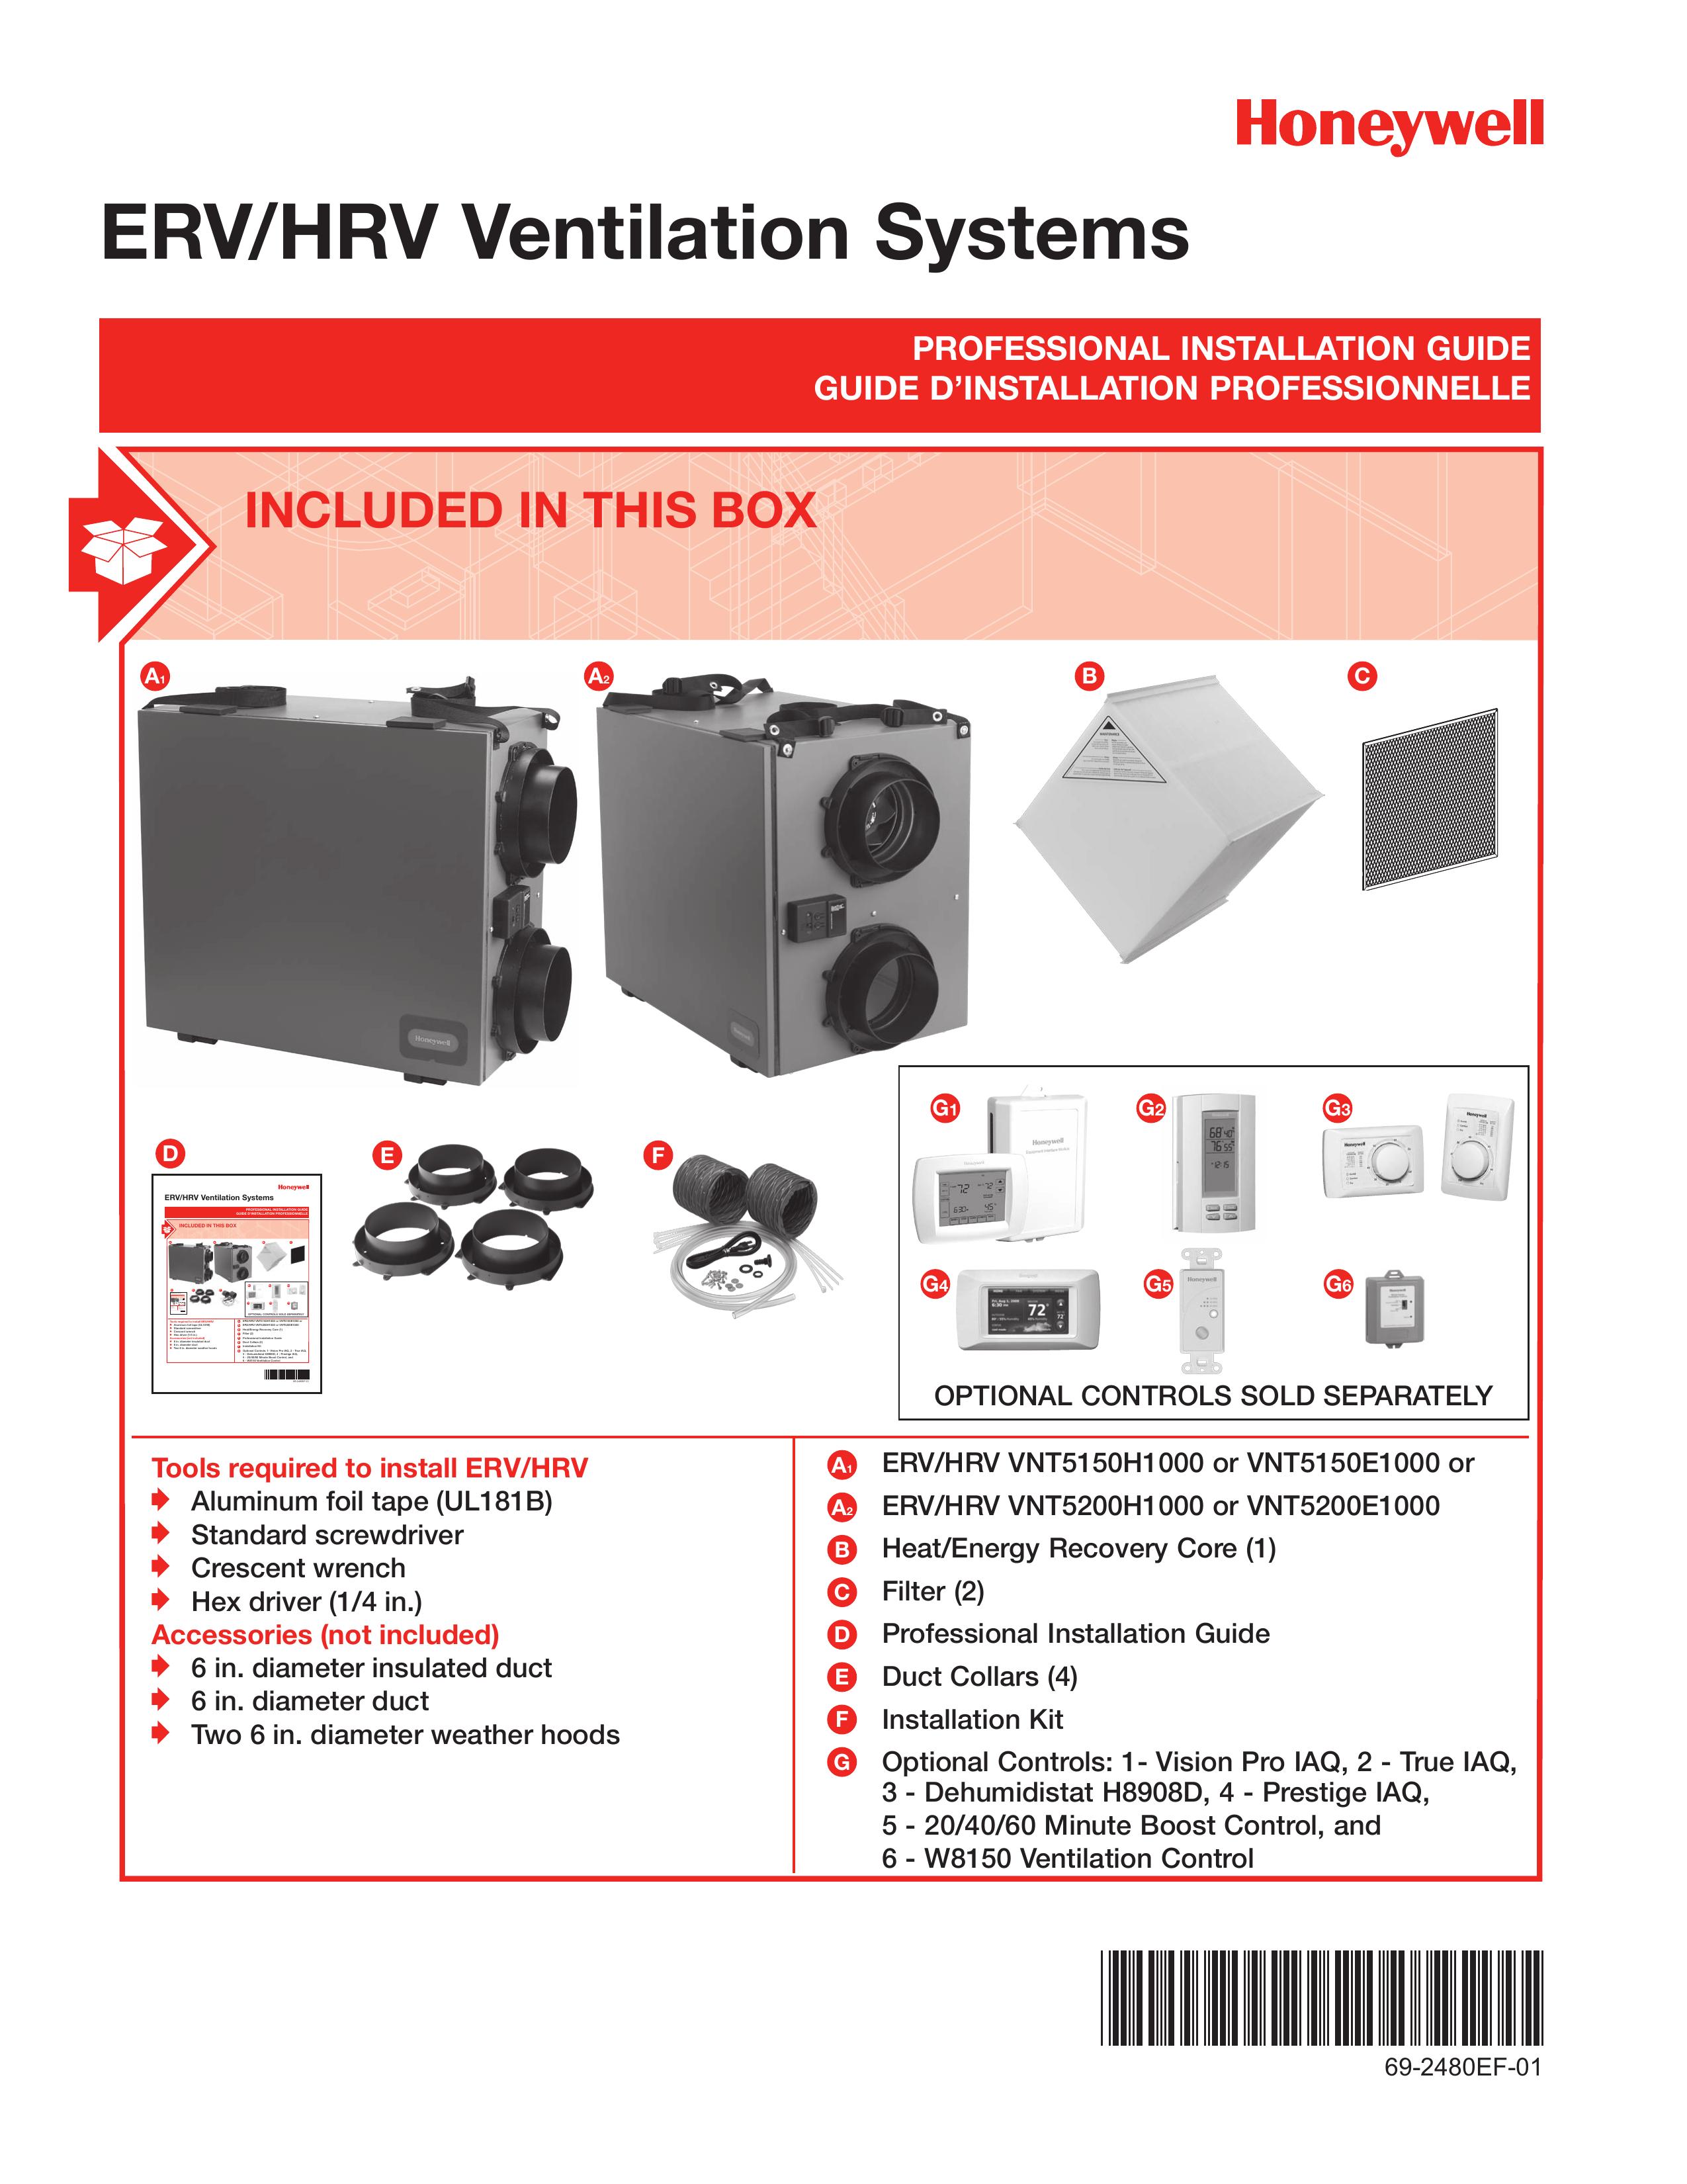 Honeywell VNT5150E1000 Ventilation Hood User Manual